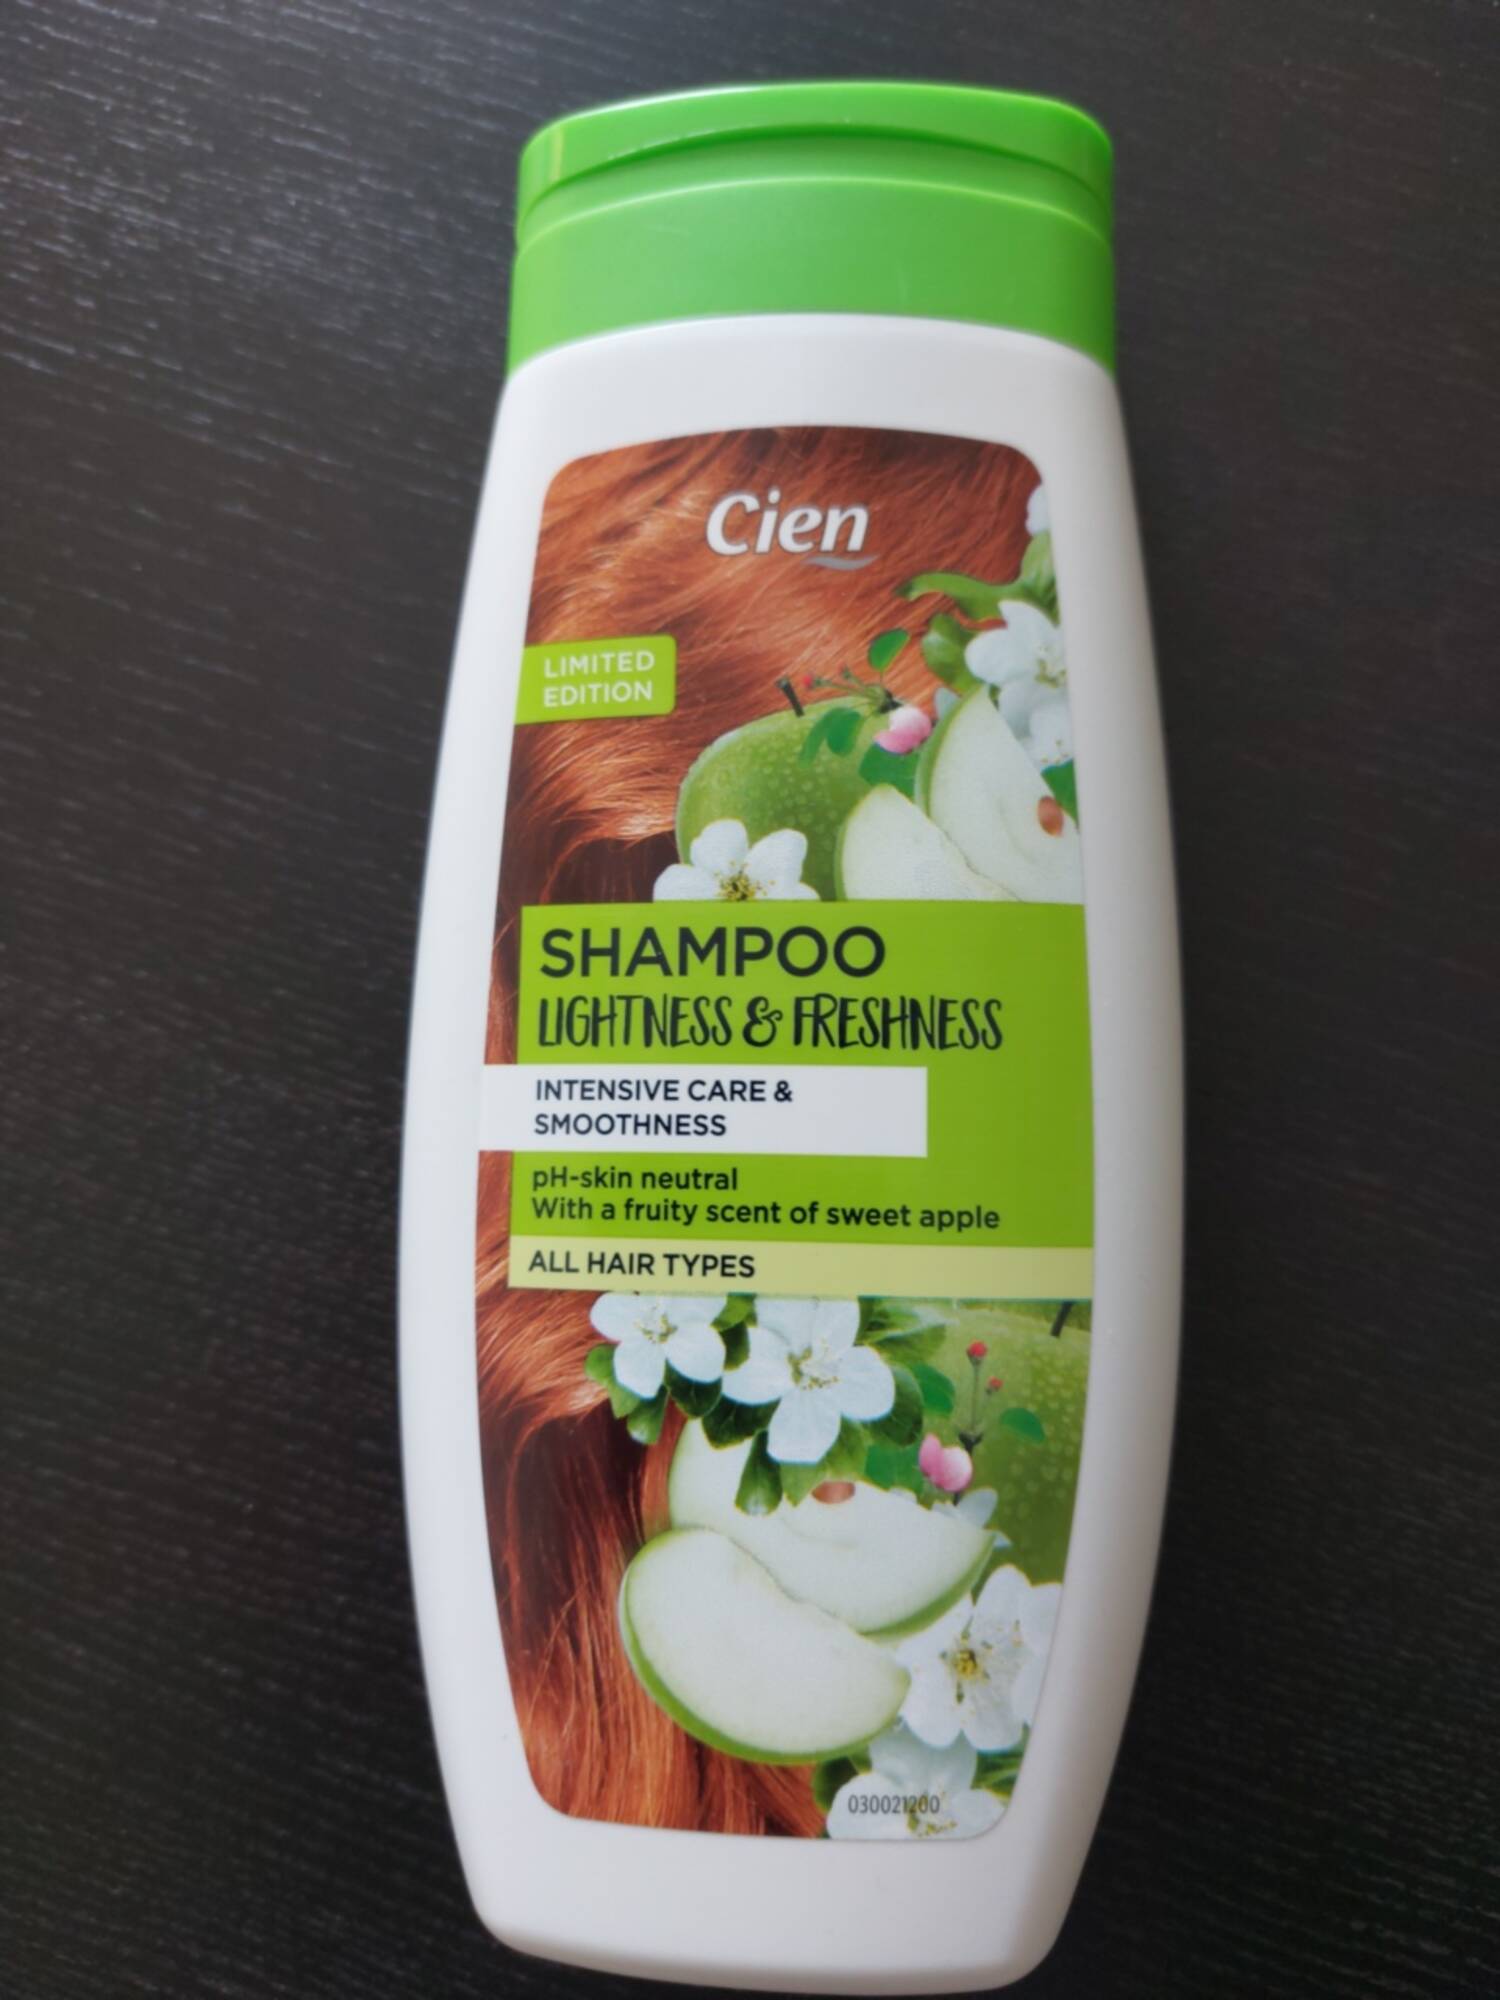 CIEN - Shampoo lightness & freshness intensive care